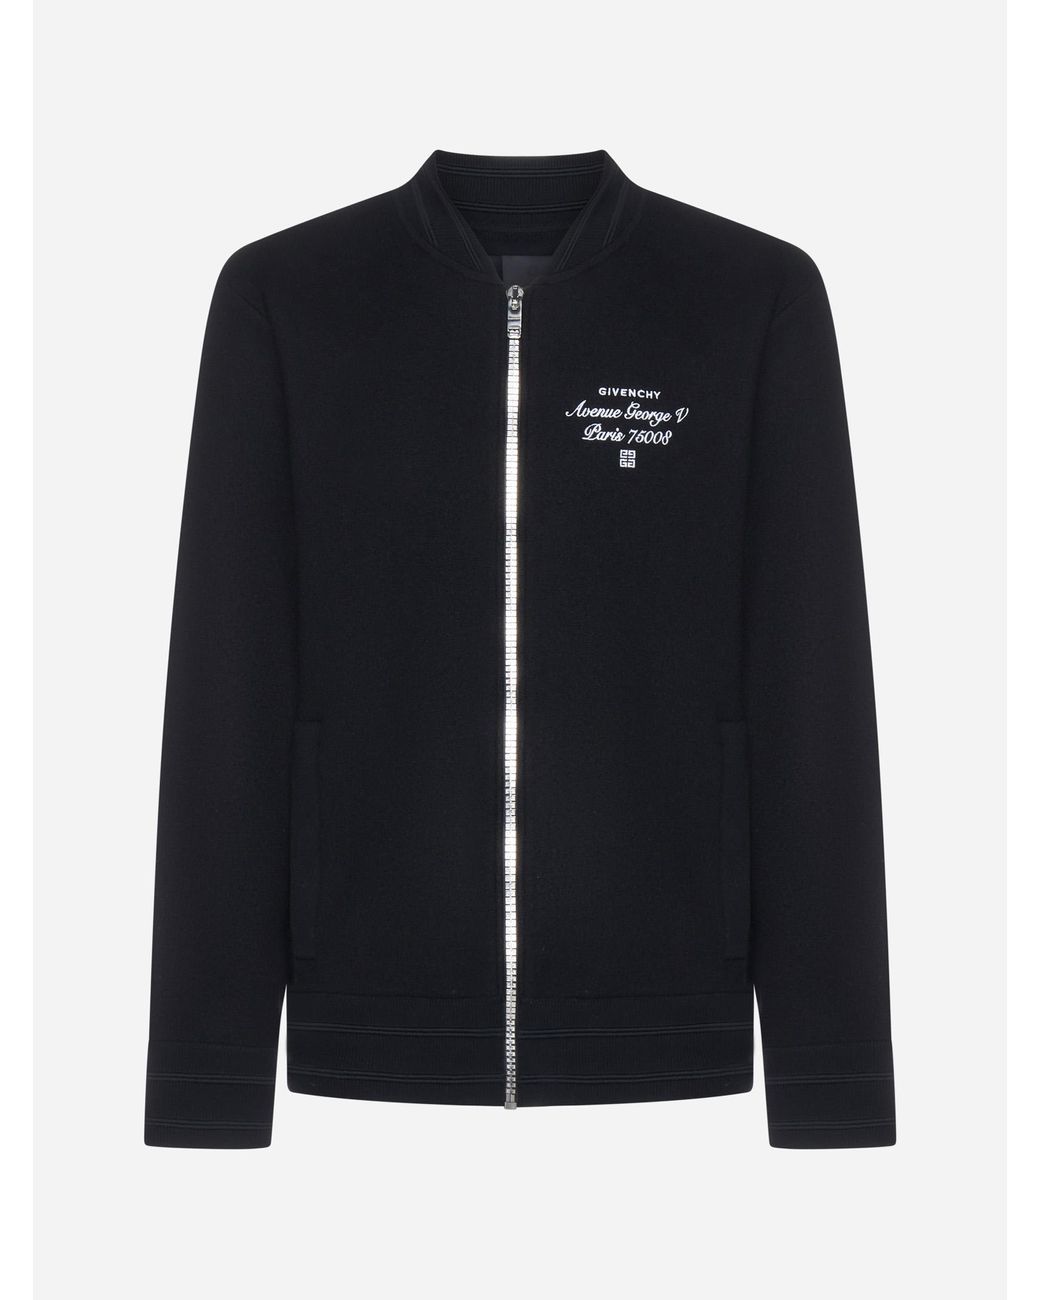 Givenchy Logo Wool Varsity Bomber Jacket in Black for Men | Lyst